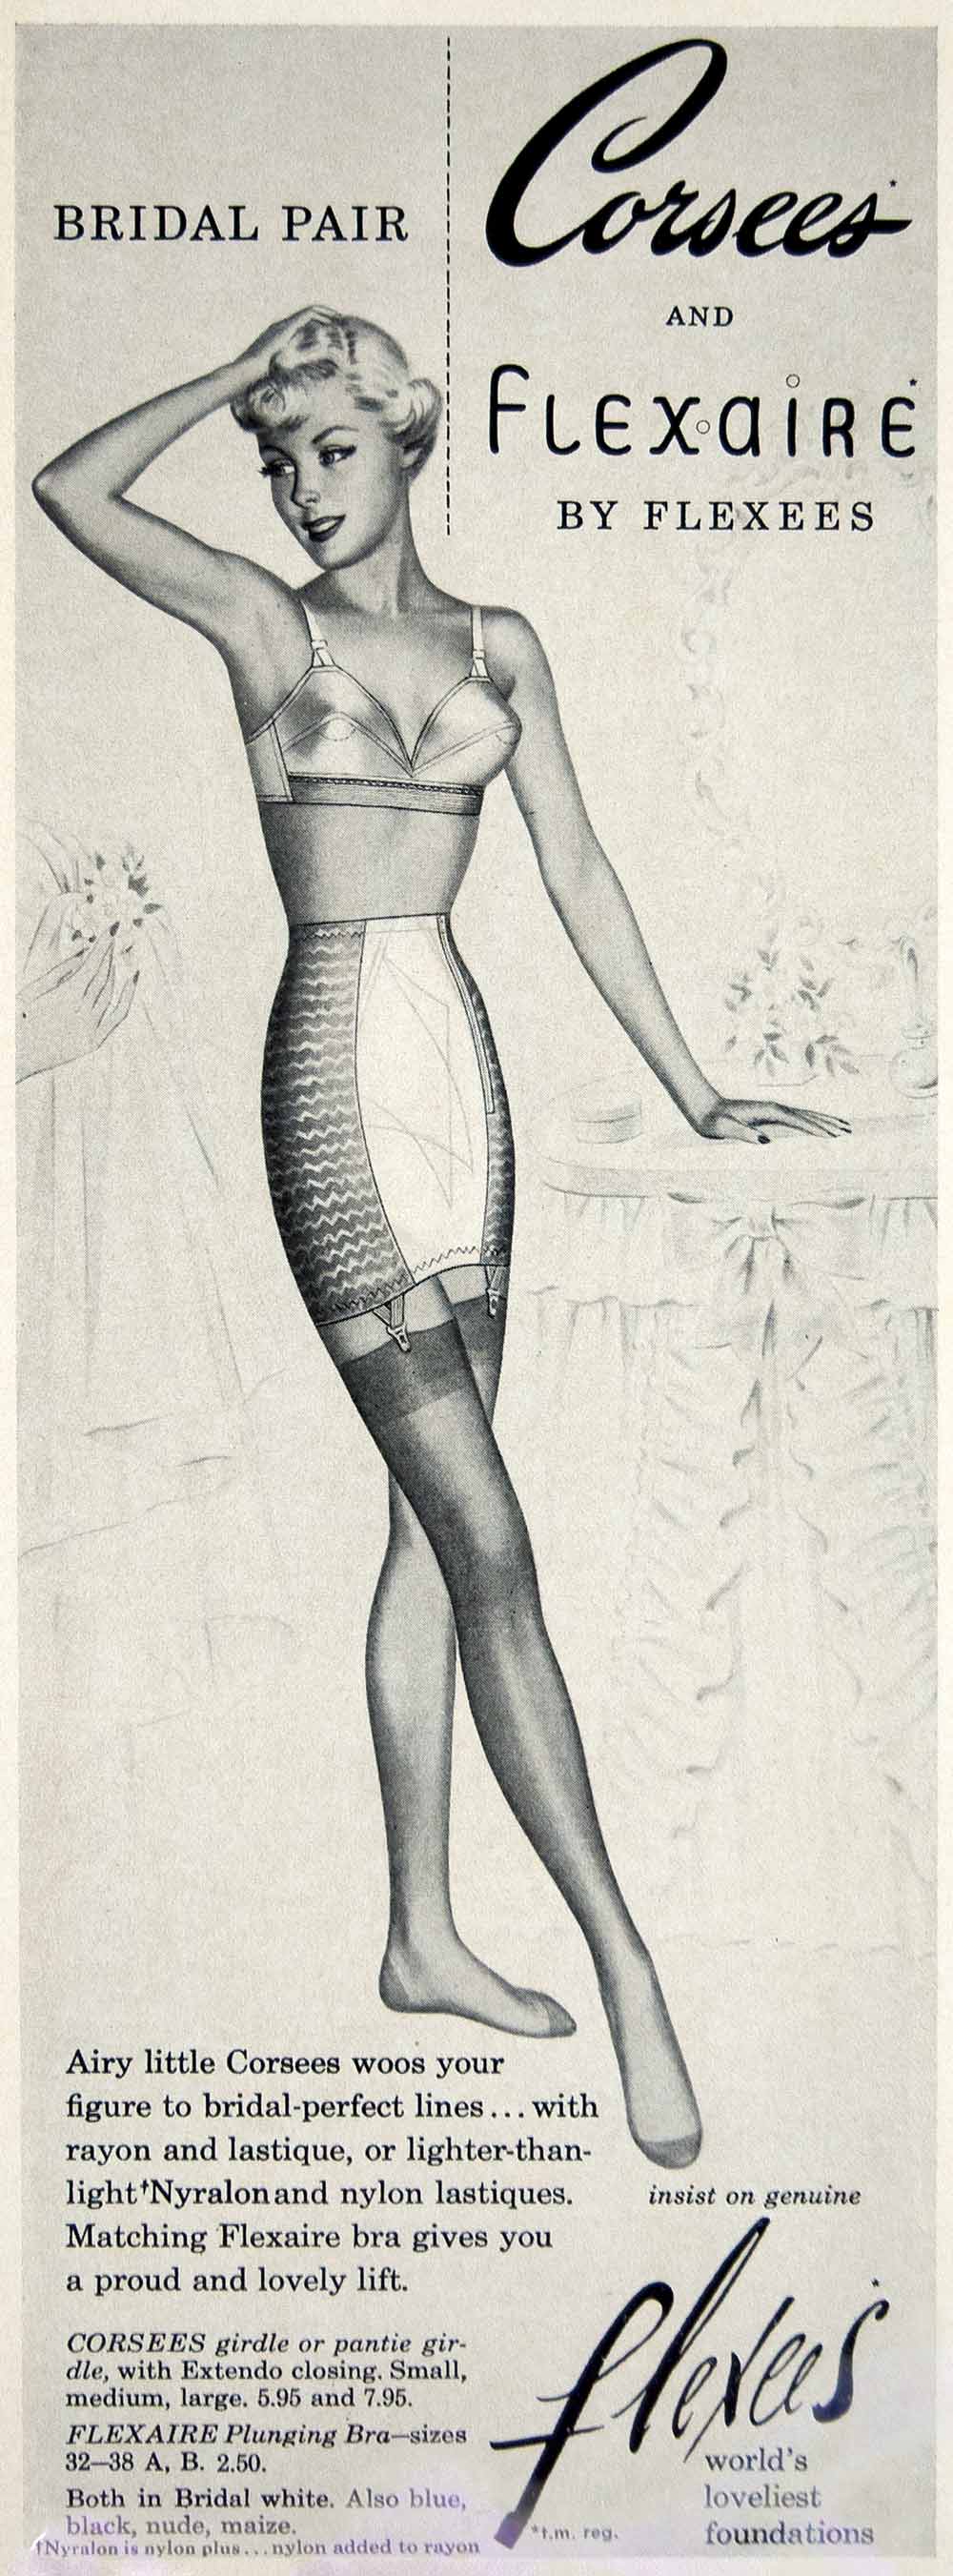 1949 Ad Vintage Flexees Corsees Girdle Flexaire Bra Lingerie Bride